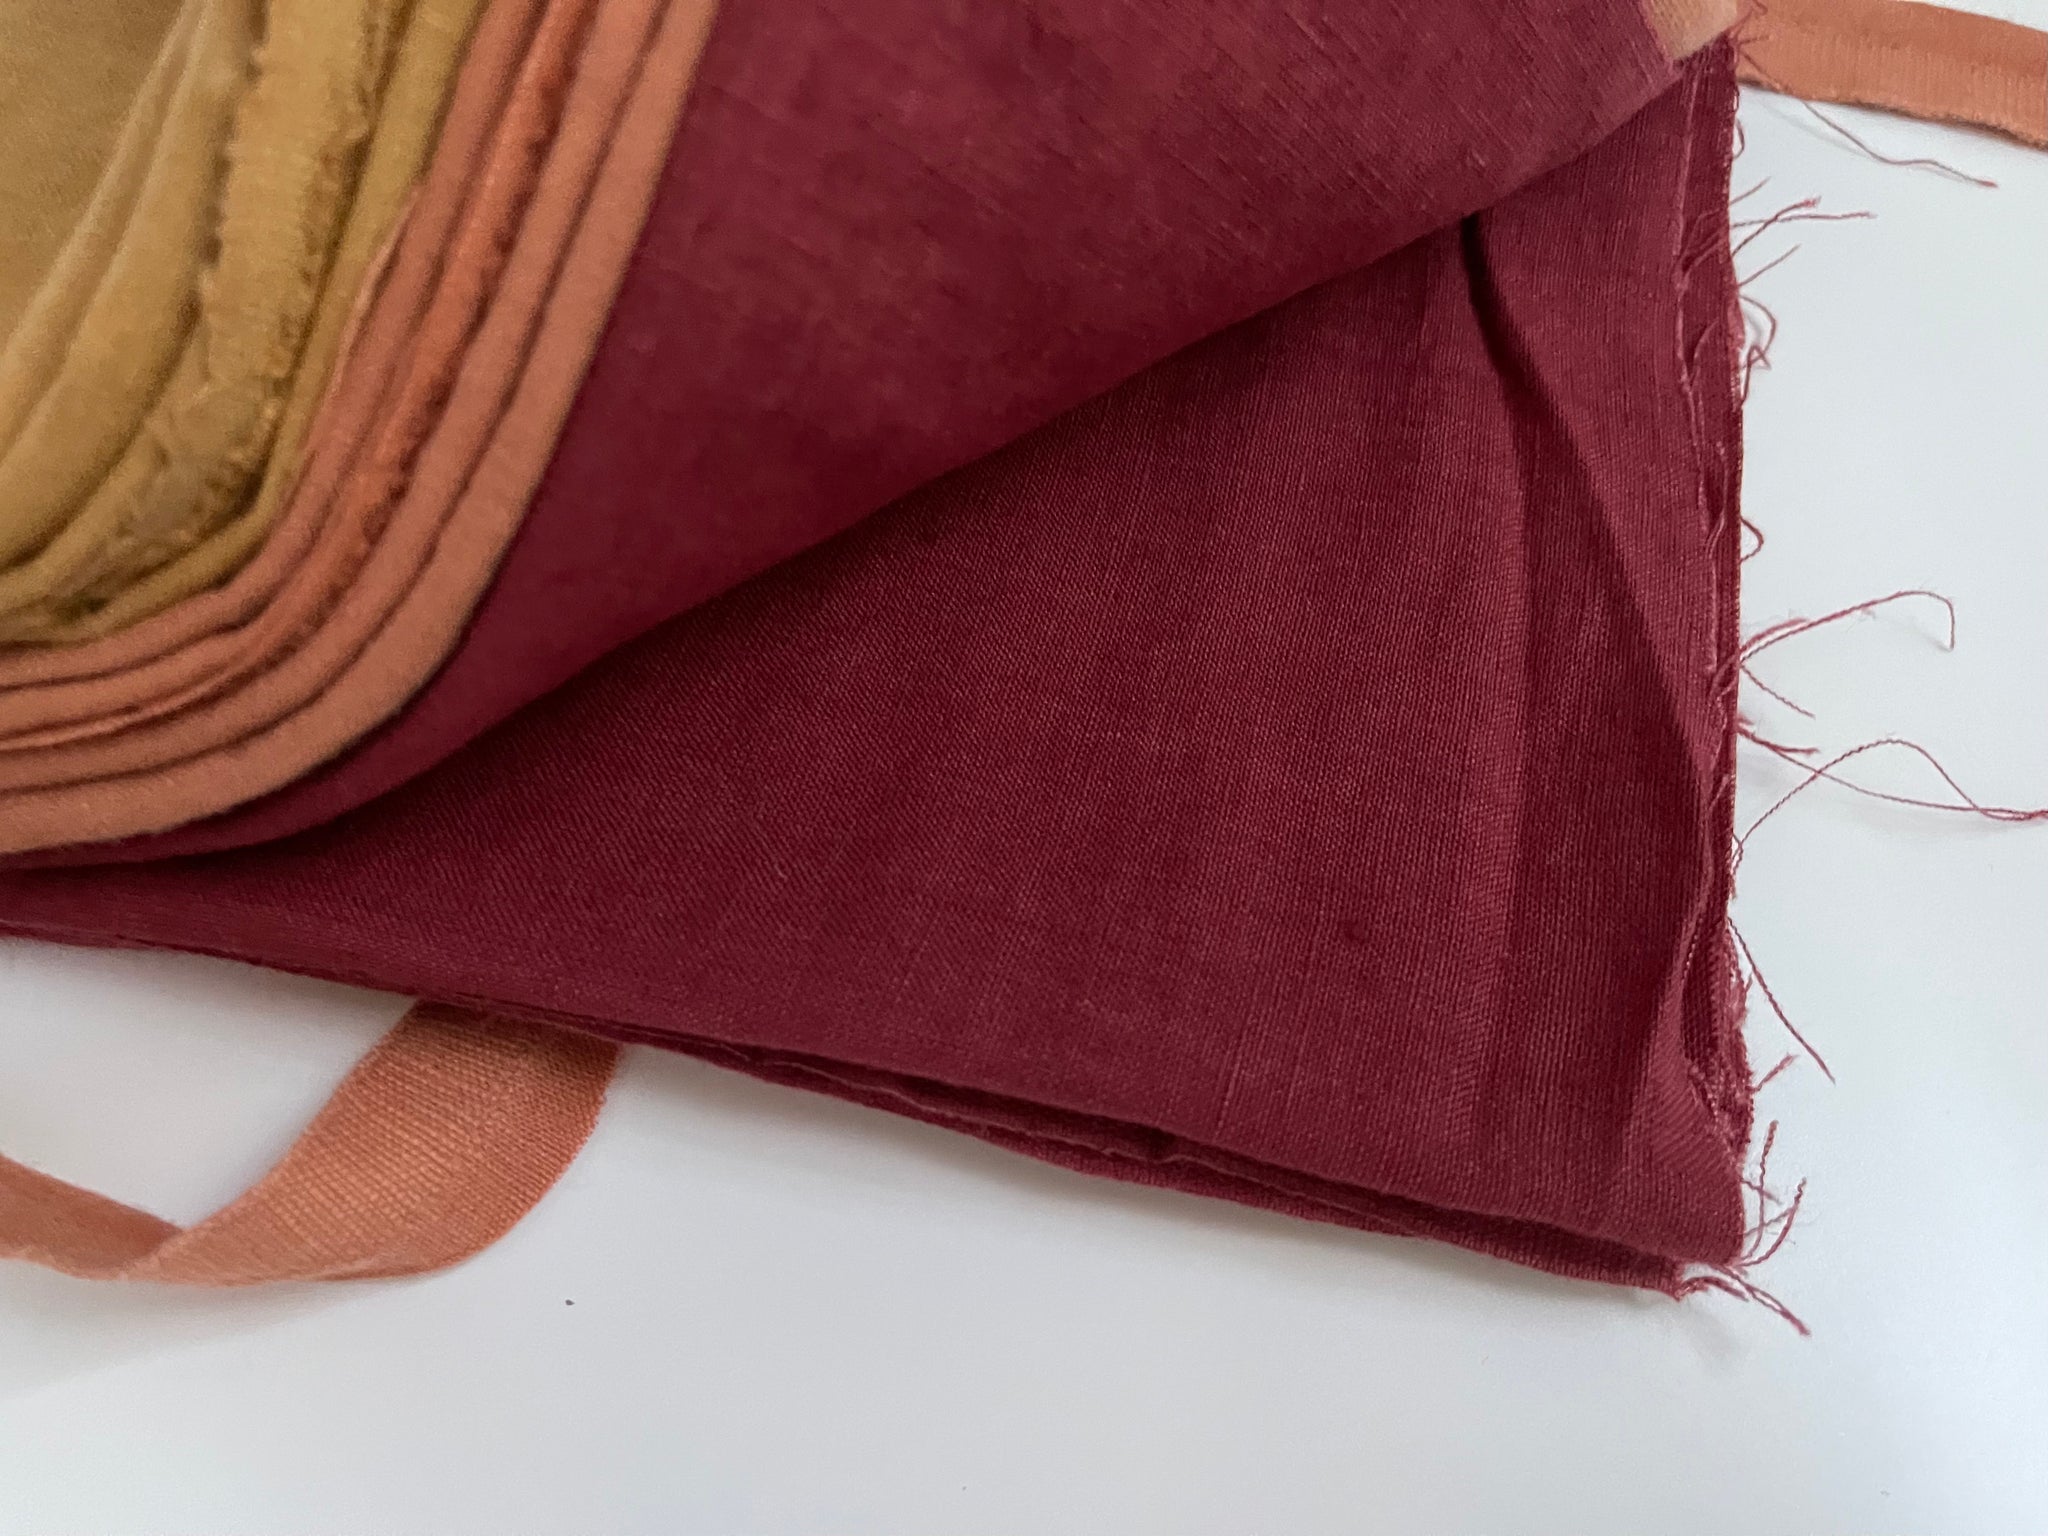 Linen Fabric Remnants - Maroon, Terracotta, Mustard